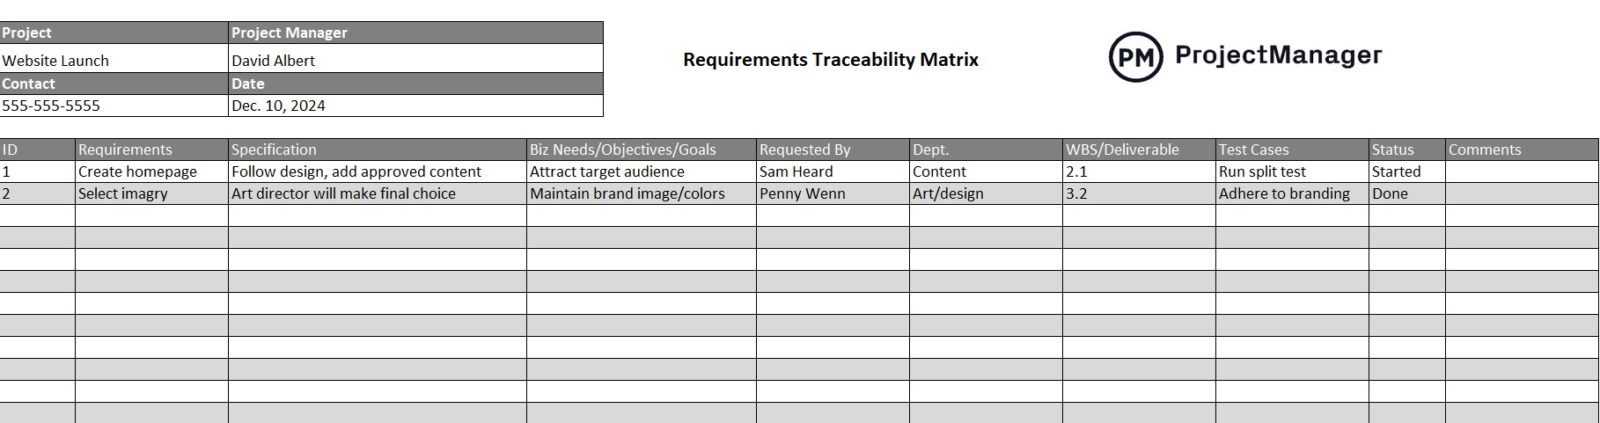 ProjectManager's Requirements Traceability Matrix Template